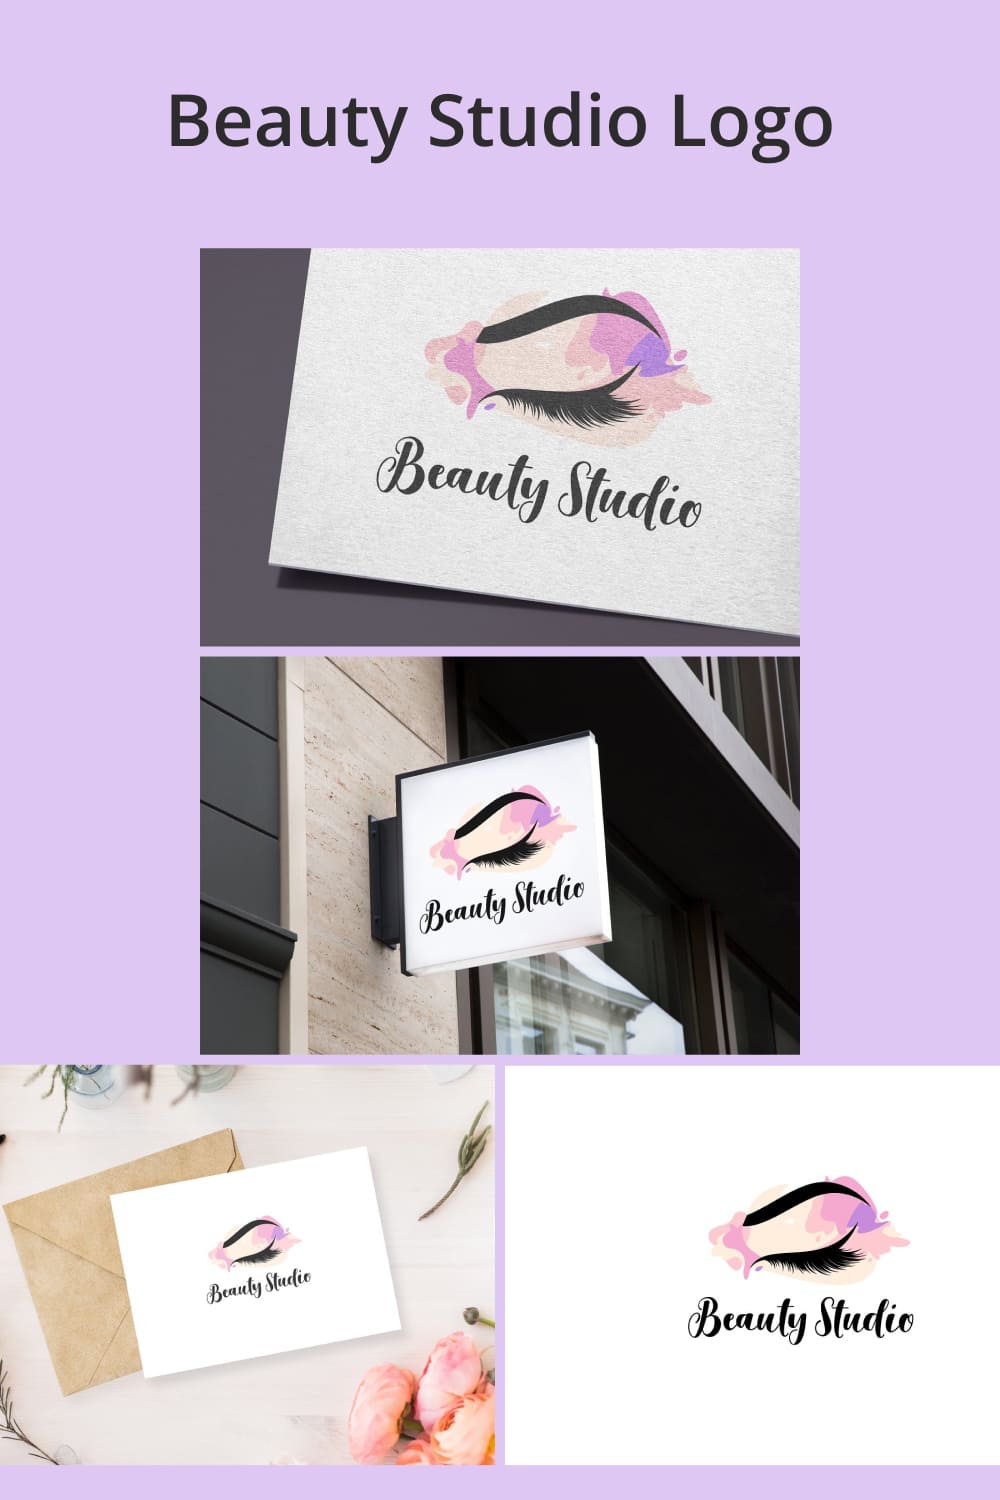 Beauty Studio Logo - pinterest image preview.